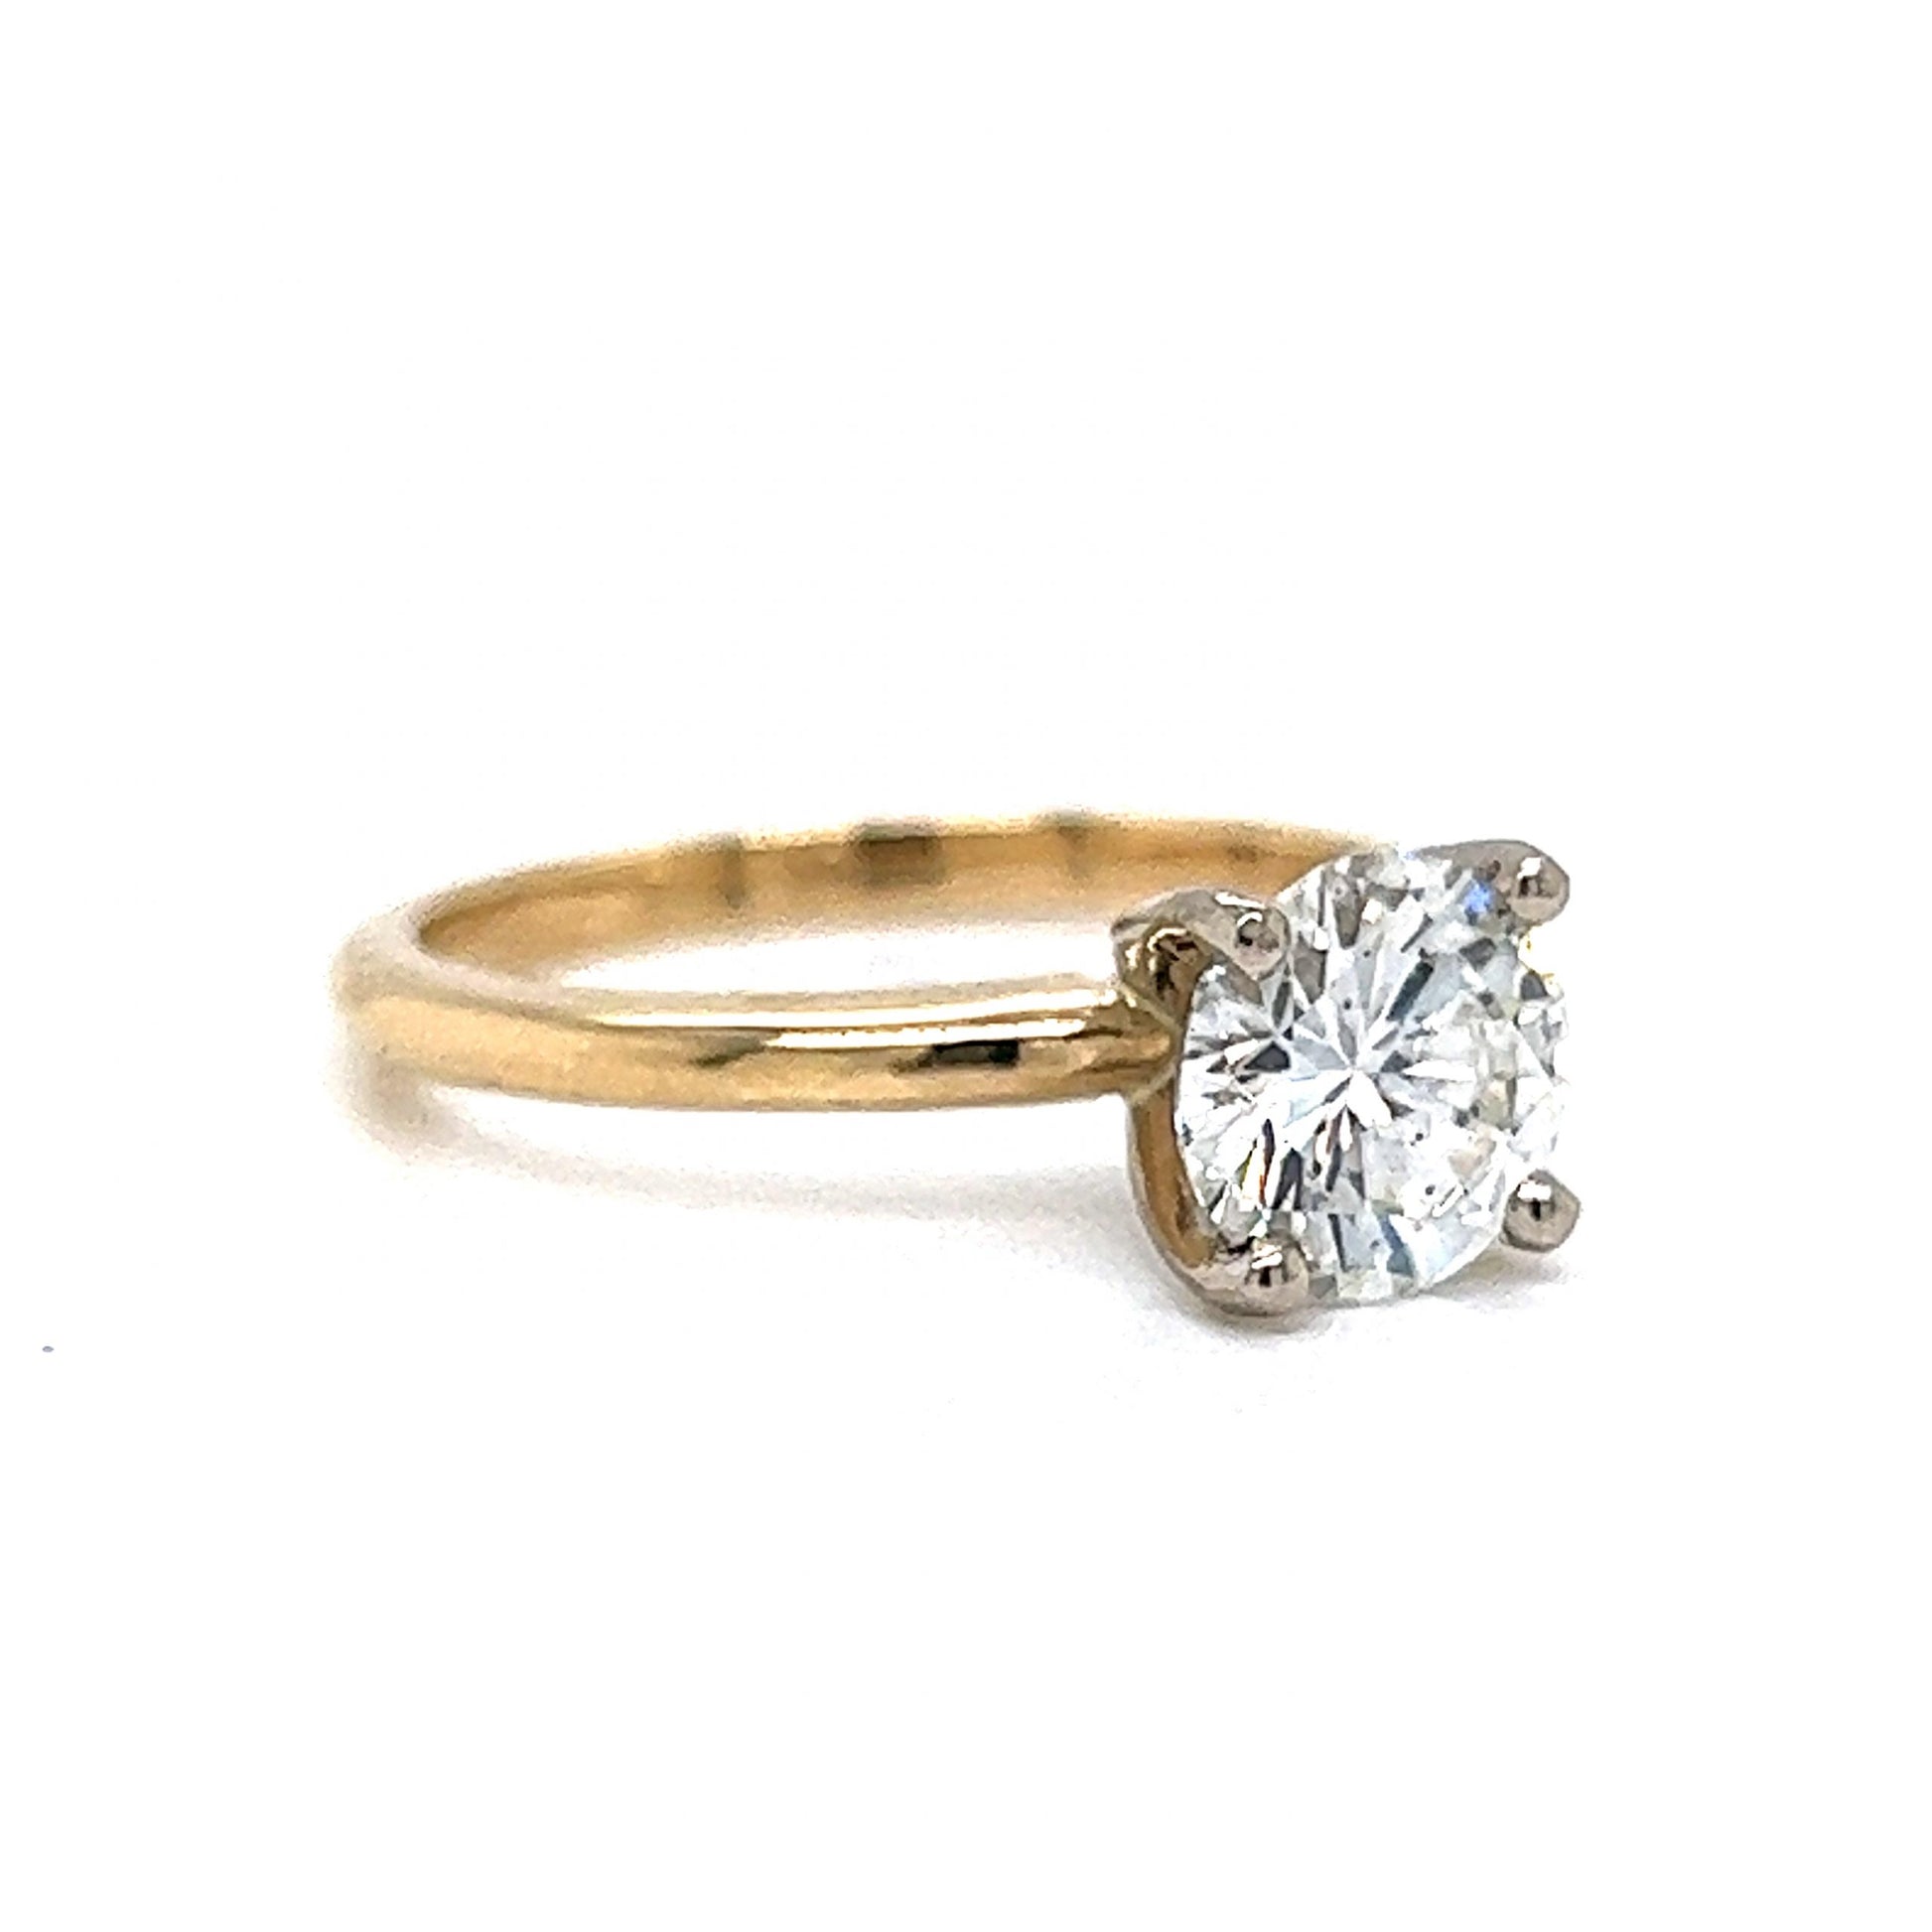 1.28 Round Brilliant Cut Diamond Engagement Ring in 14k Gold